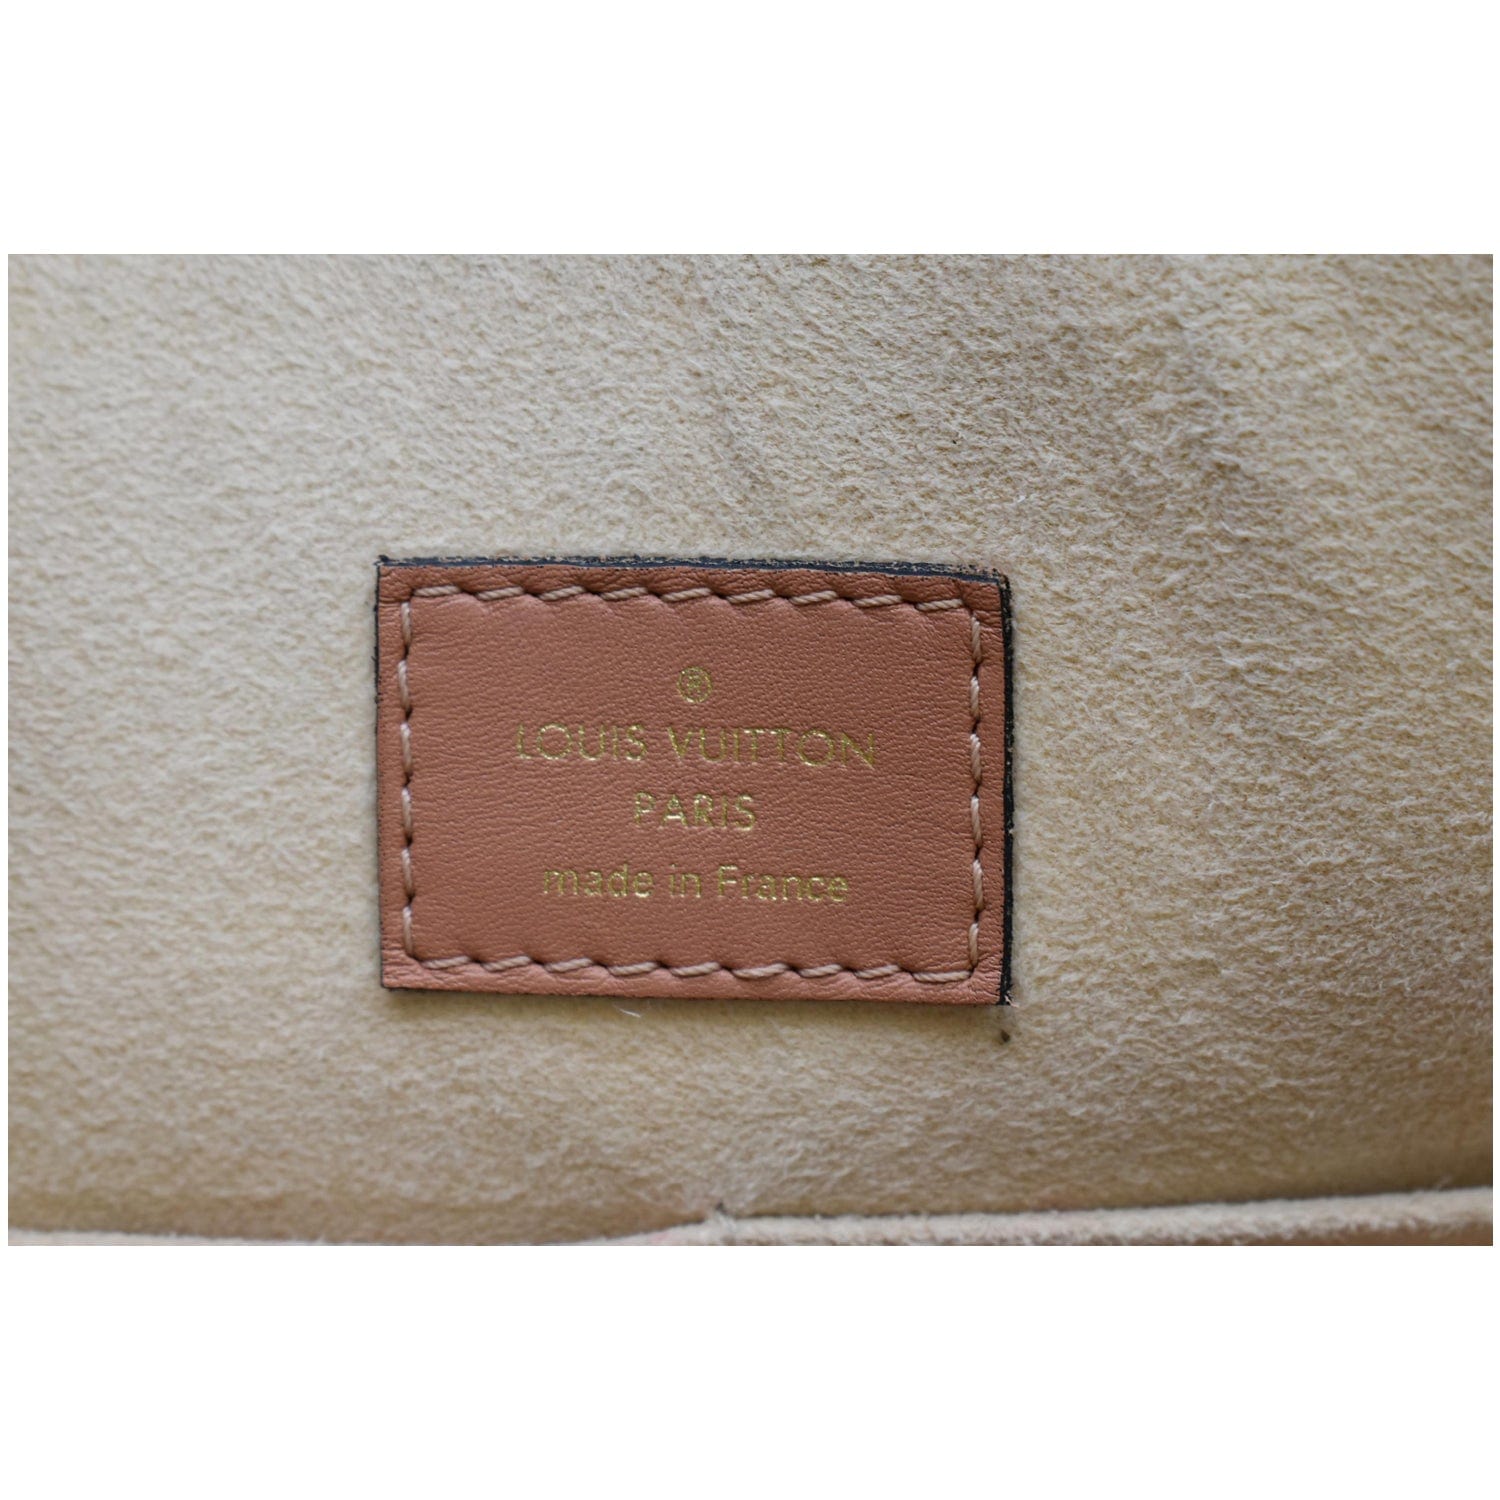 445 Louis Vuitton Handbag Stock Photos - Free & Royalty-Free Stock